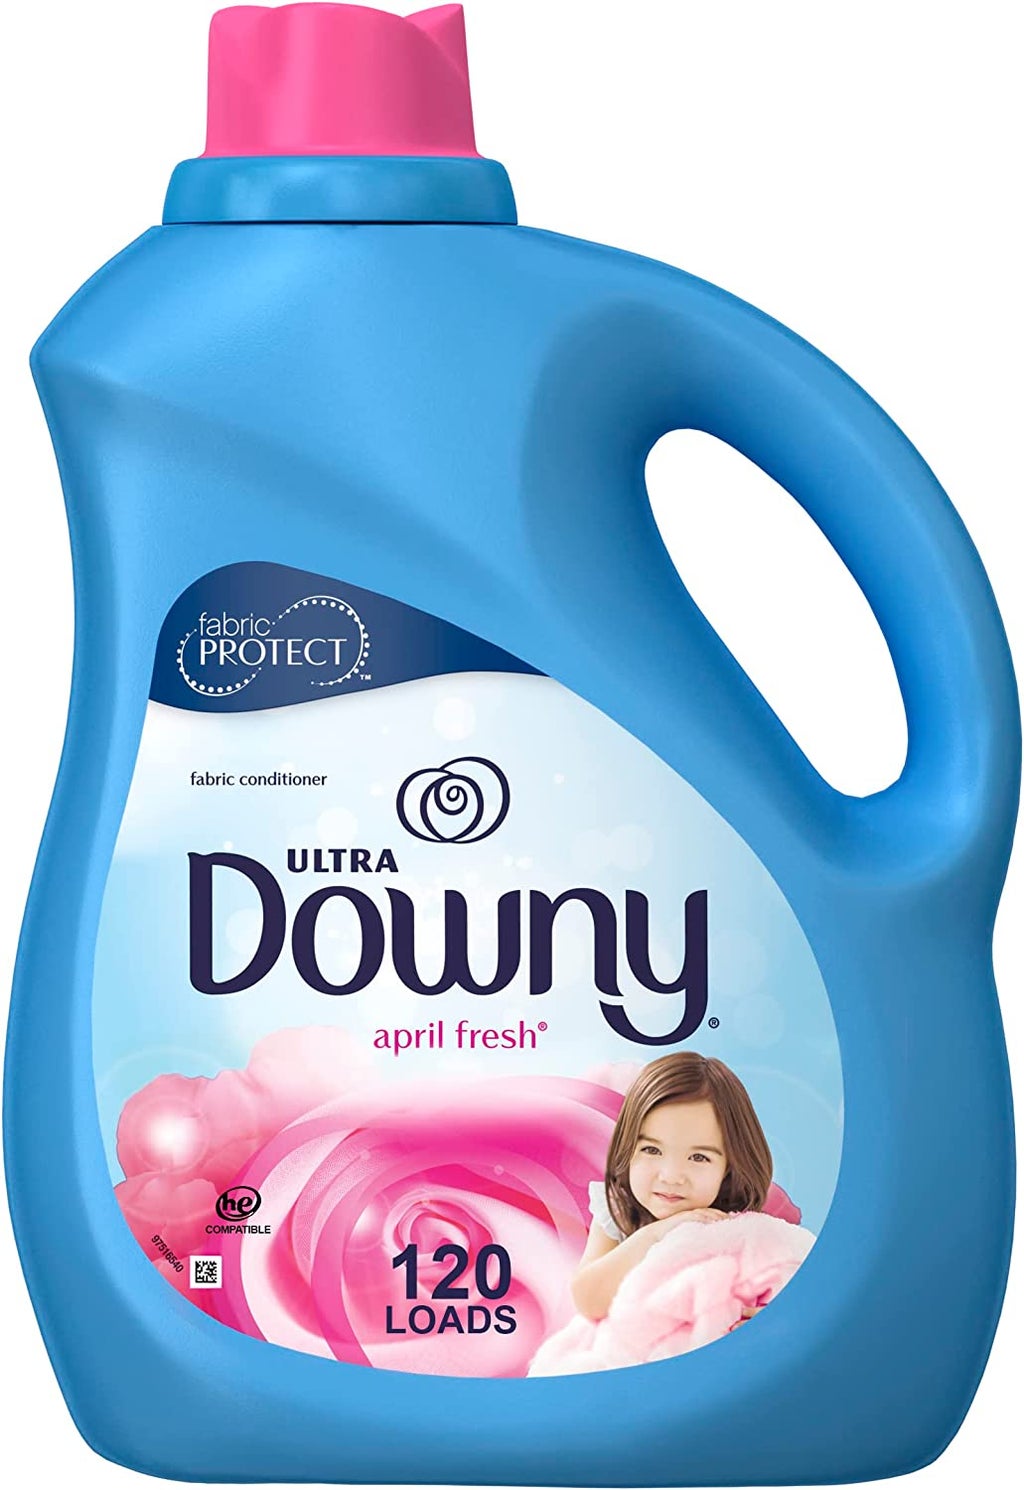 downy softener